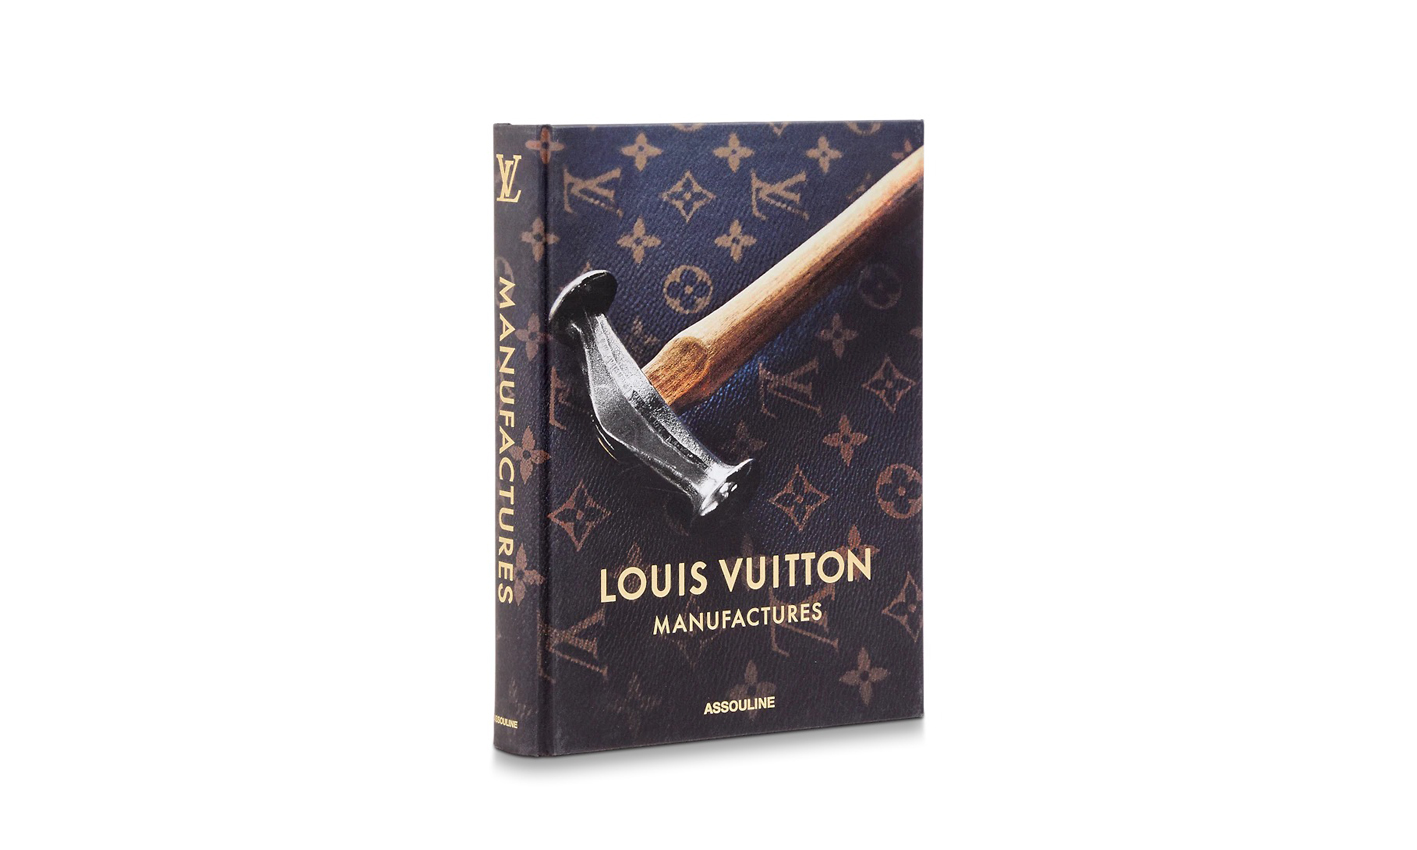 LOUIS VUITTON 推出典藏特辑《路易威登制造》